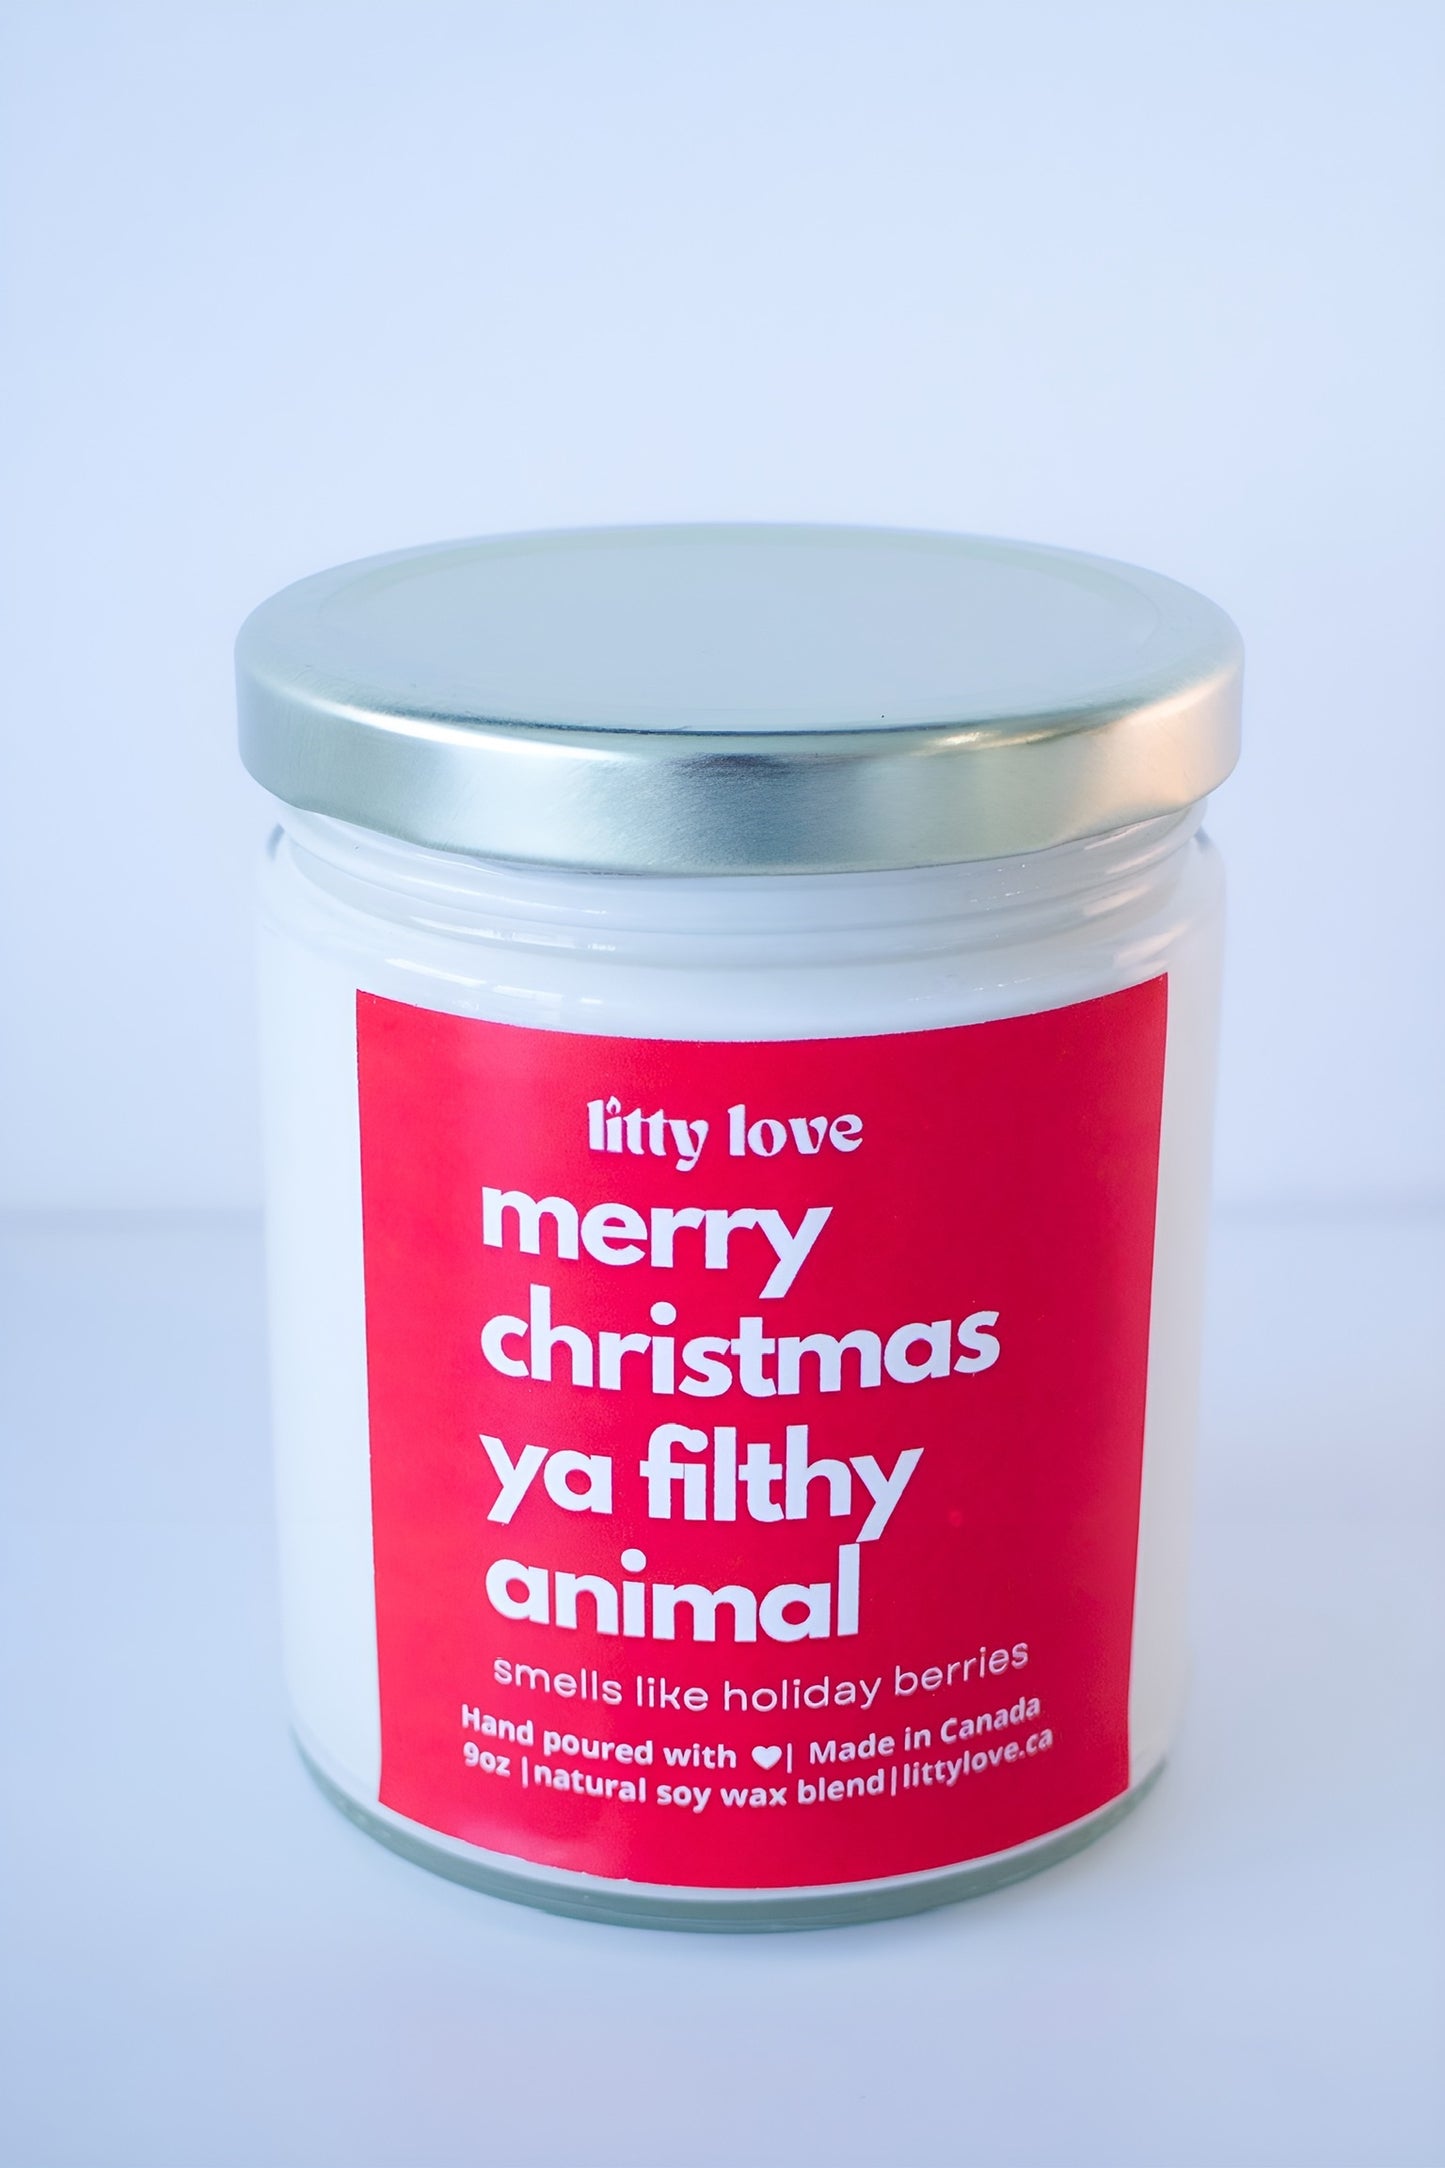 Merry Christmas ya filthy animal - 9oz holiday berry candle